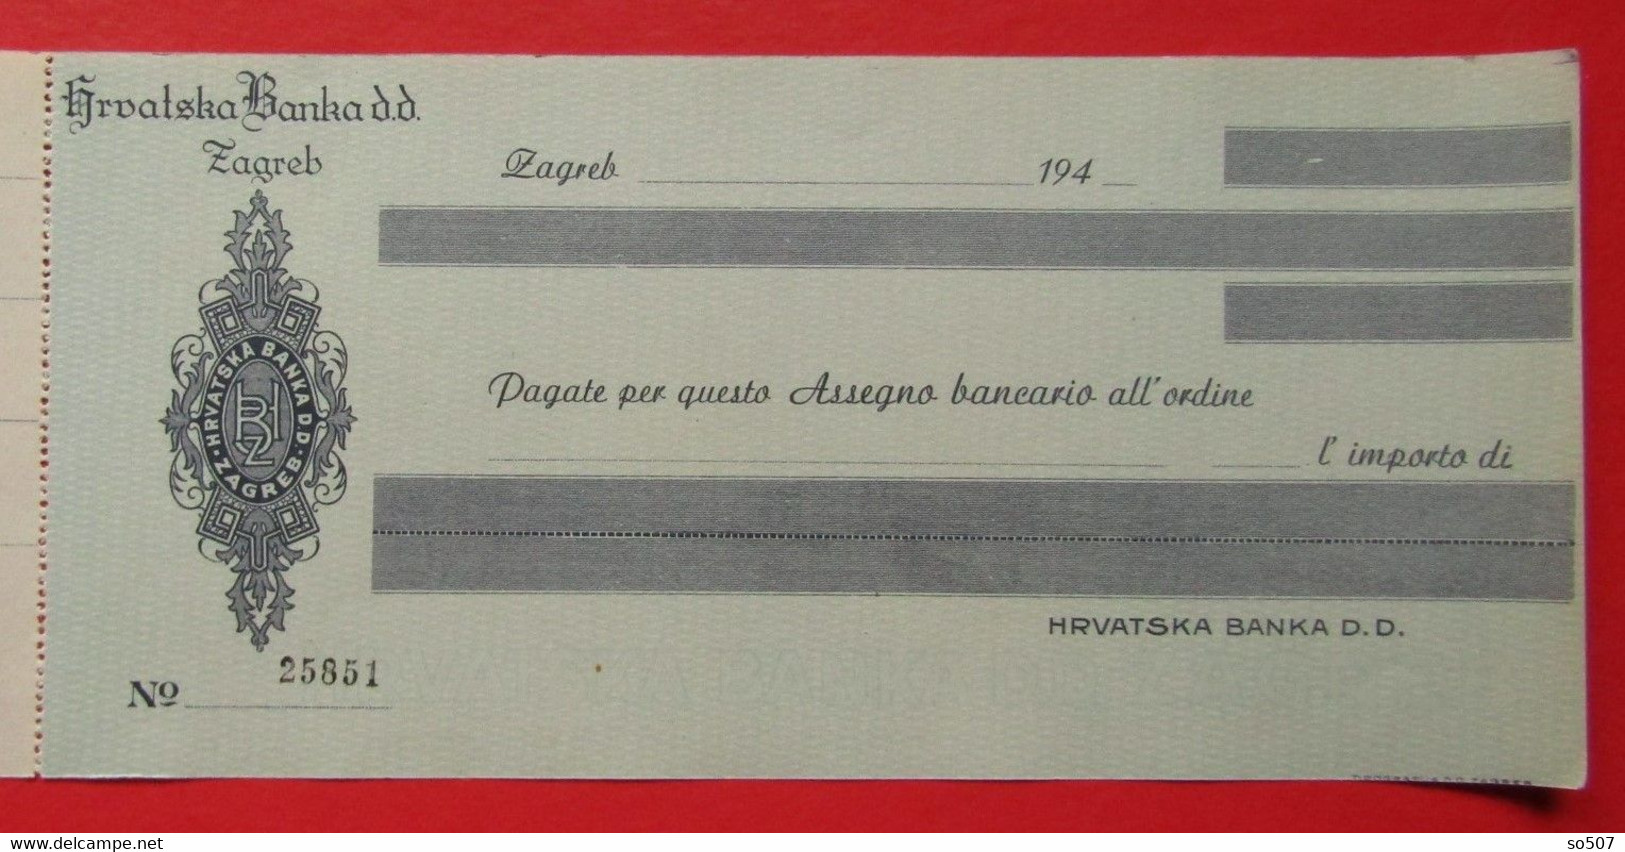 X1- Check, Cheque, Promissory Note, Bill Of Exchange- Croatian Bank, Hrvatska Banka D.d. Zagreb, Kingdom Of Yugoslavia - Chèques & Chèques De Voyage